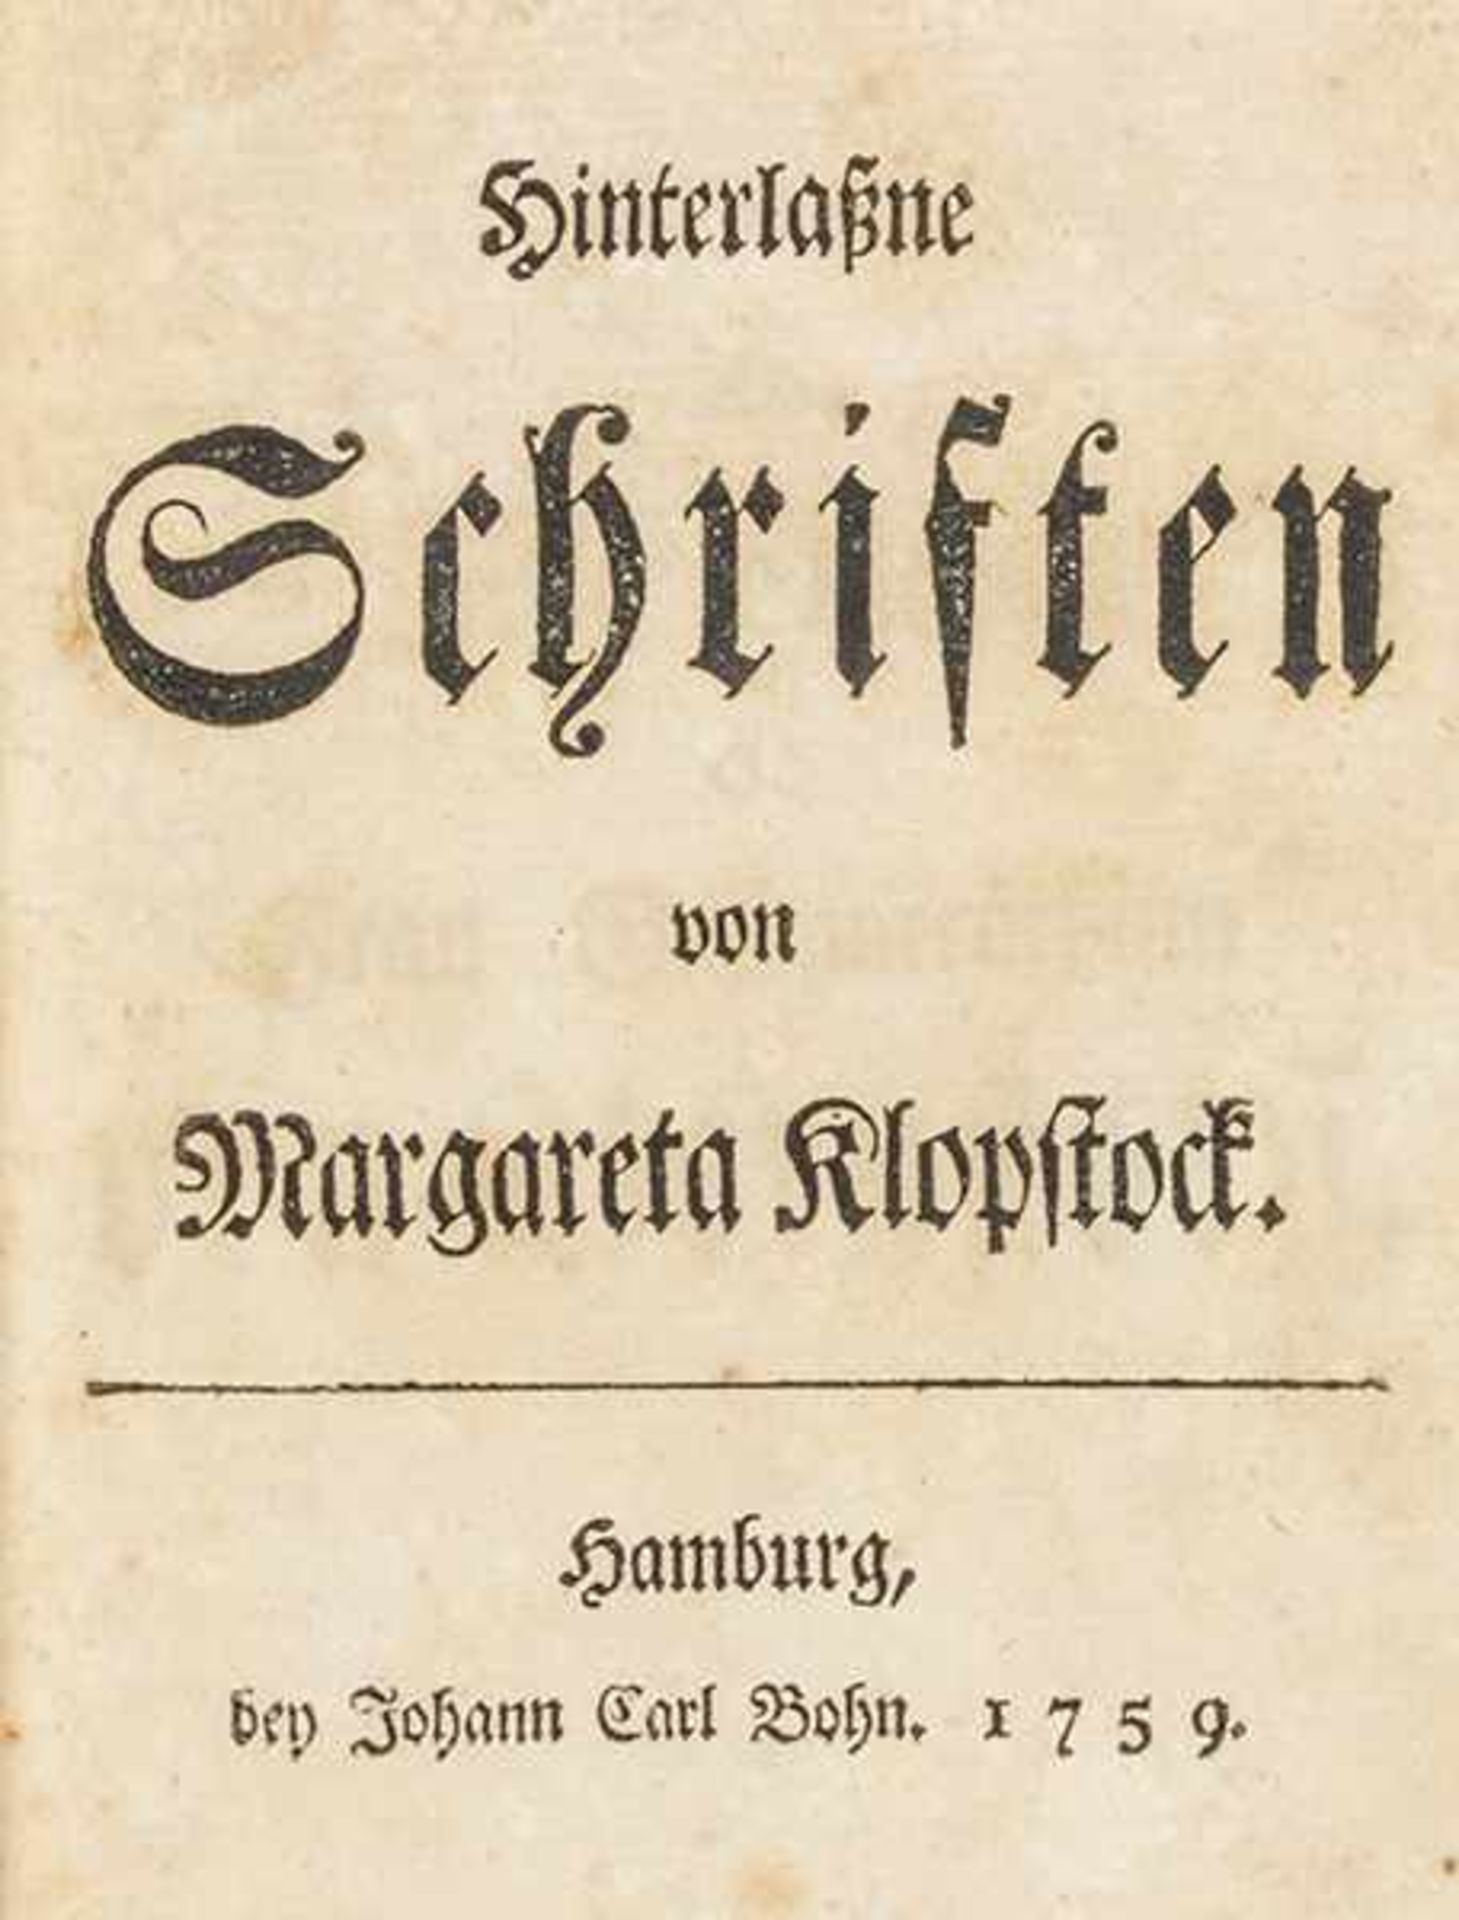 Klopstock, Margareta. Hinterlaßne Schriften. Bohn, Hamburg, 1759. LXXXIV, 84 S. 20,5 x 12,5 cm.